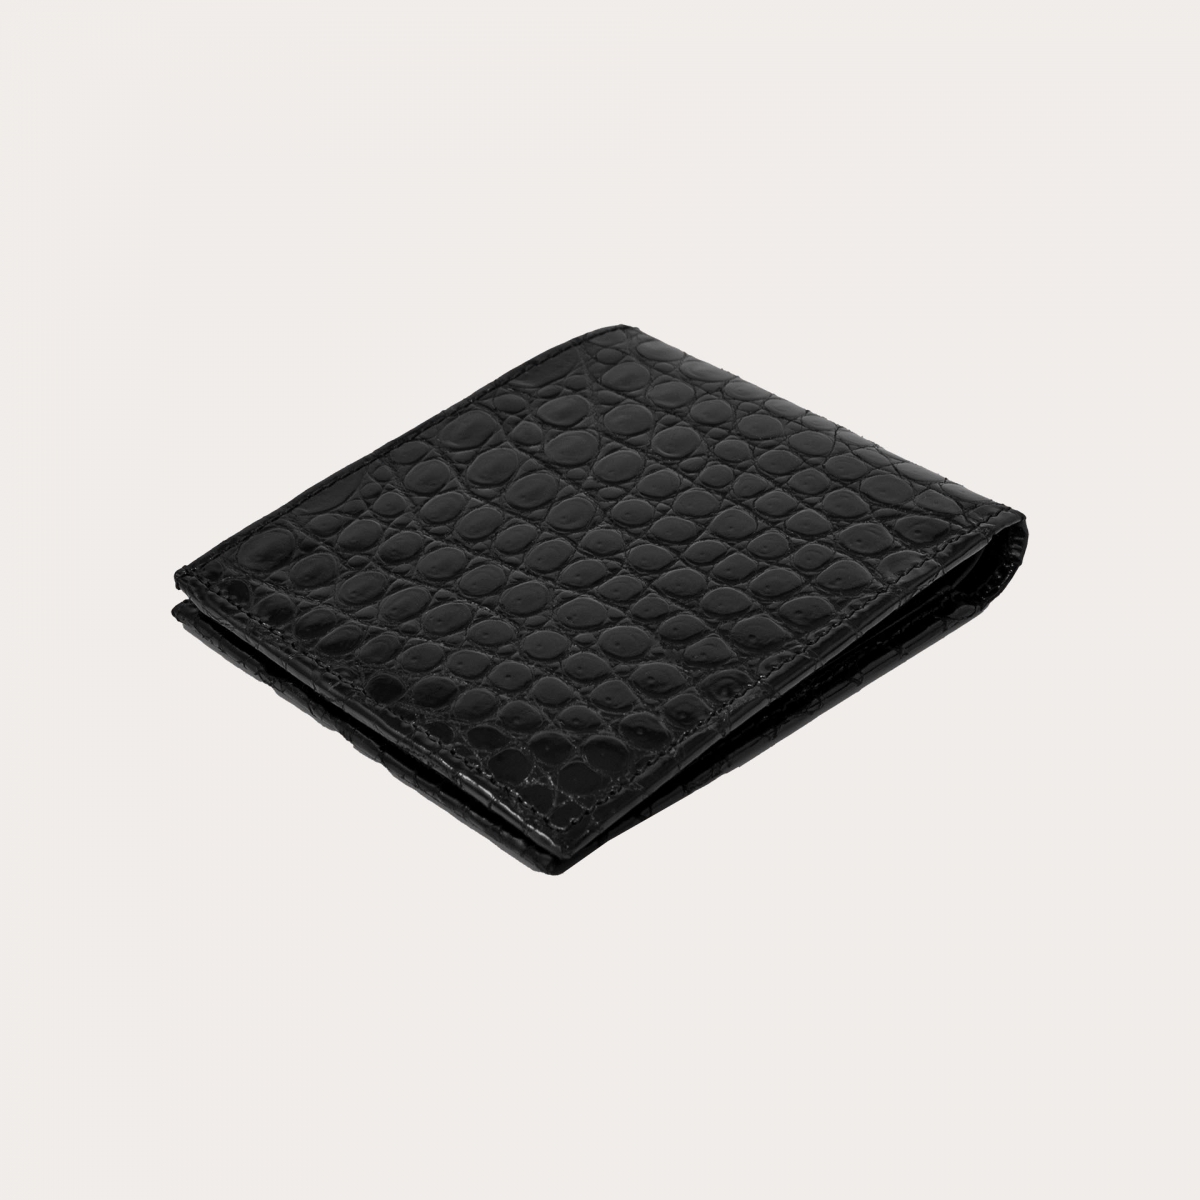 Compact Men's Wallet in genuine crocodile leather, black color